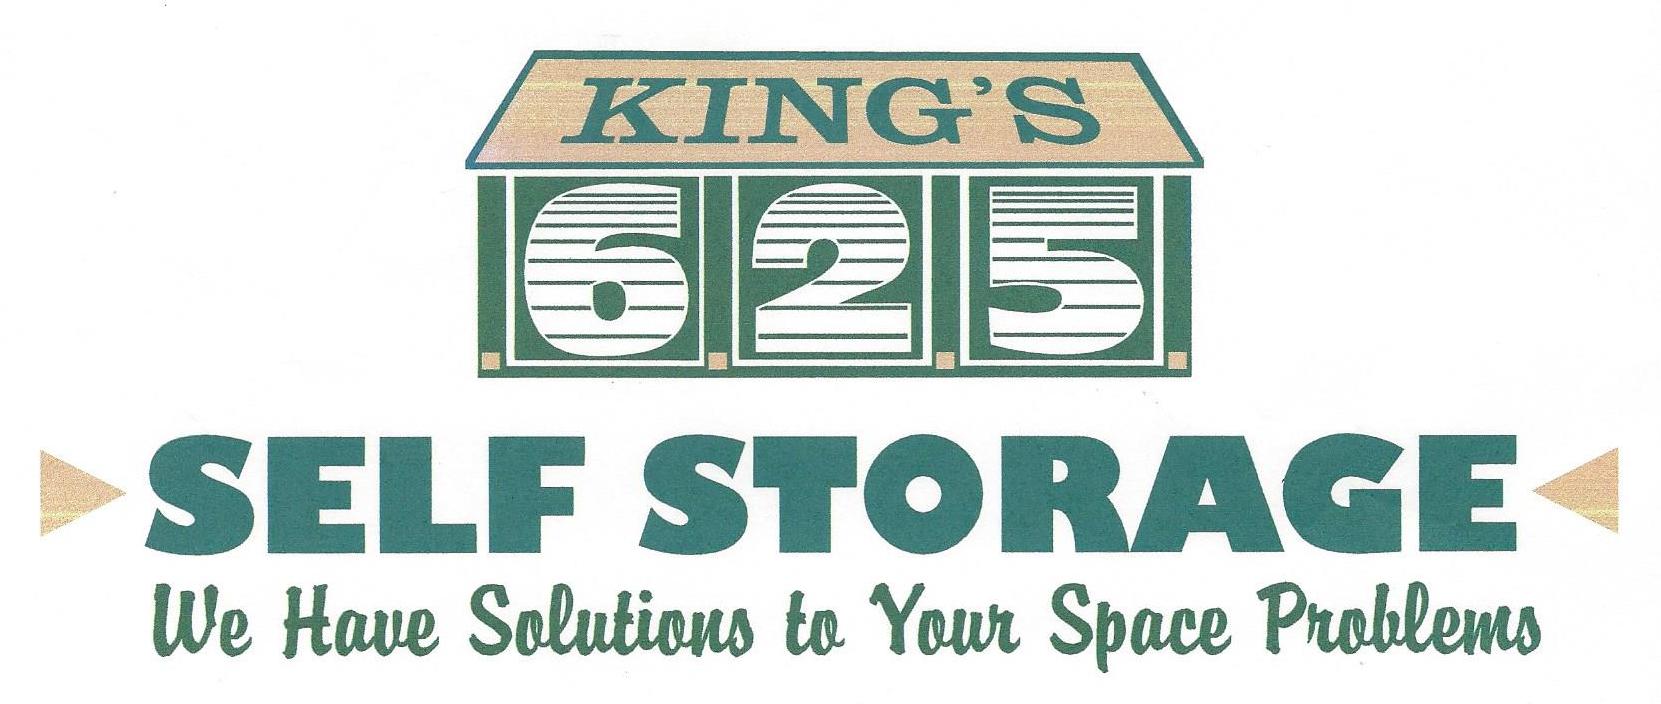 King's 625 Self Storage